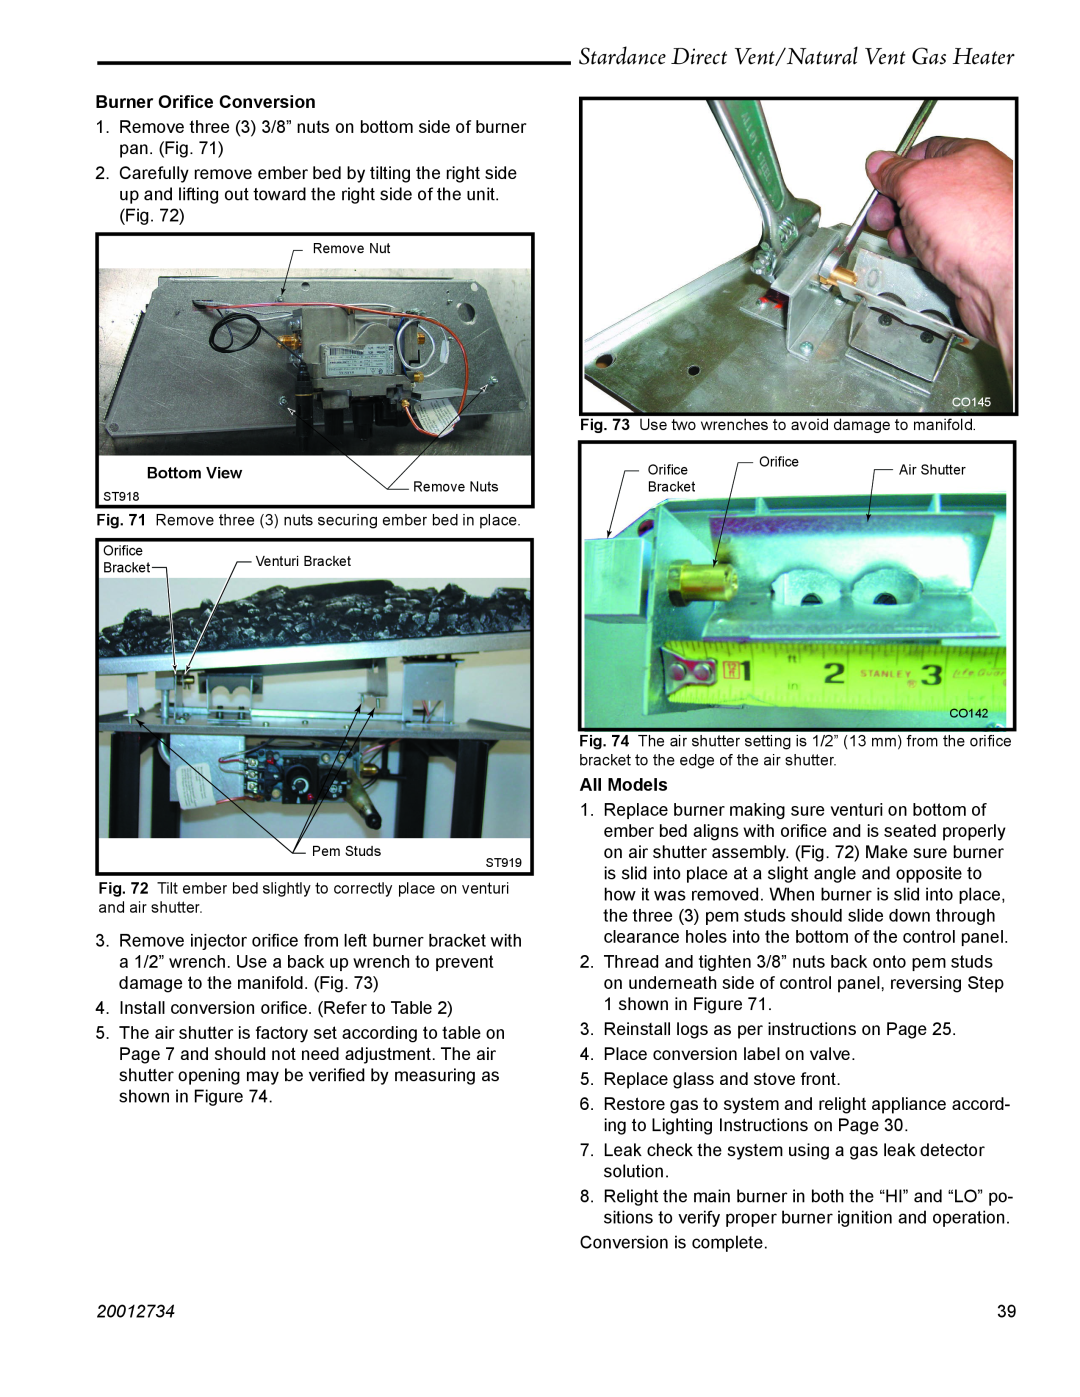 Vermont Casting SDDVT manual Stardance Direct Vent/Natural Vent Gas Heater, Burner Oriﬁce Conversion, All Models, 20012734 